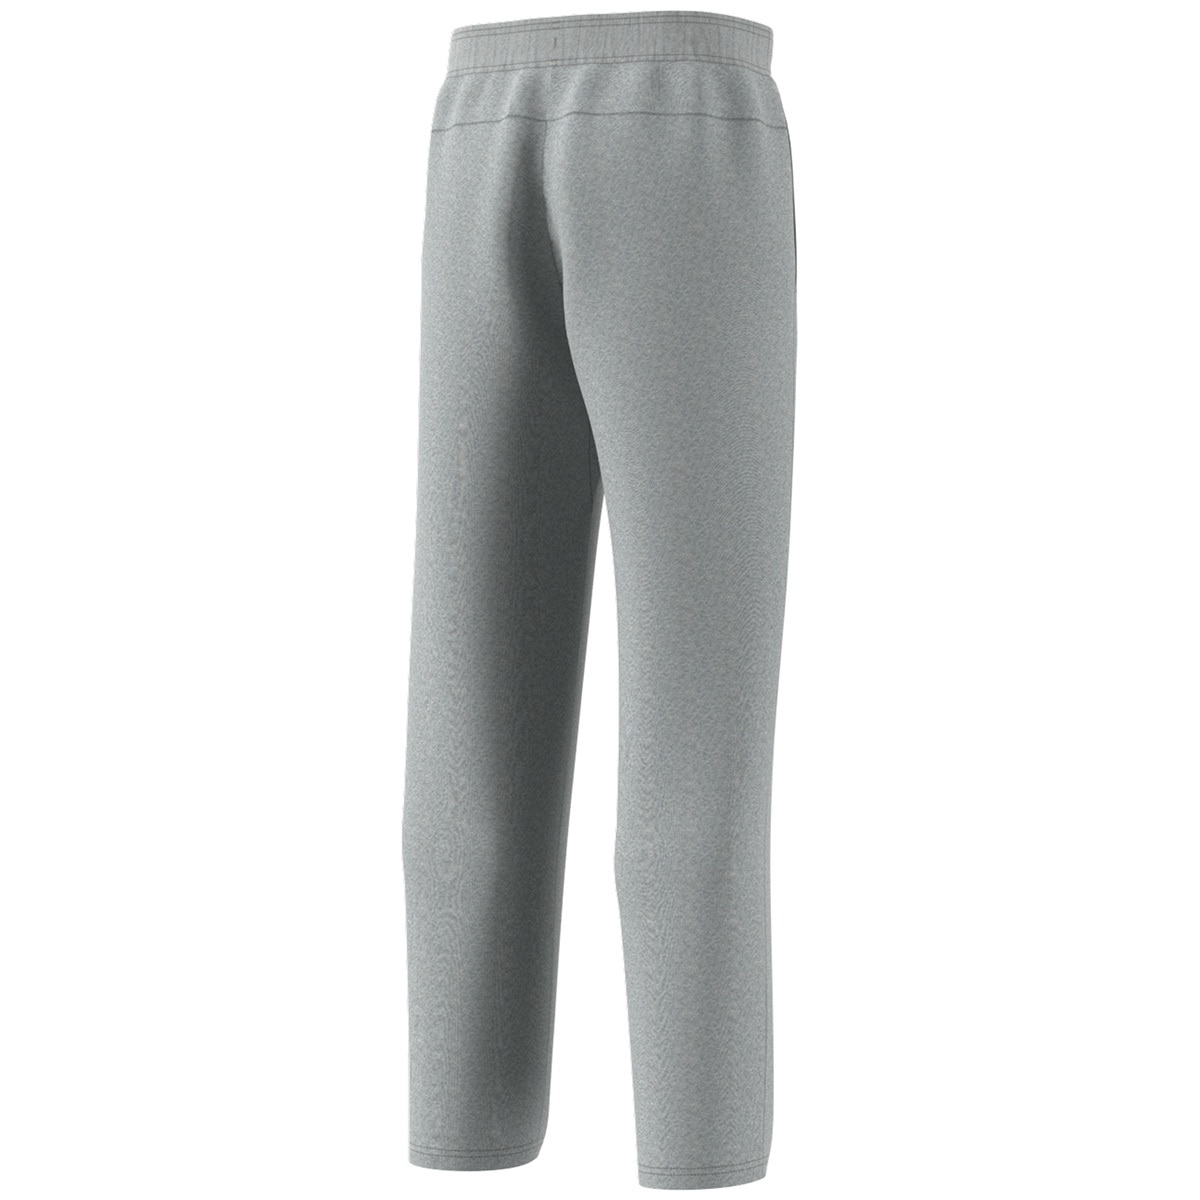 Adidas Men's Fleece Pants - Mid Grey